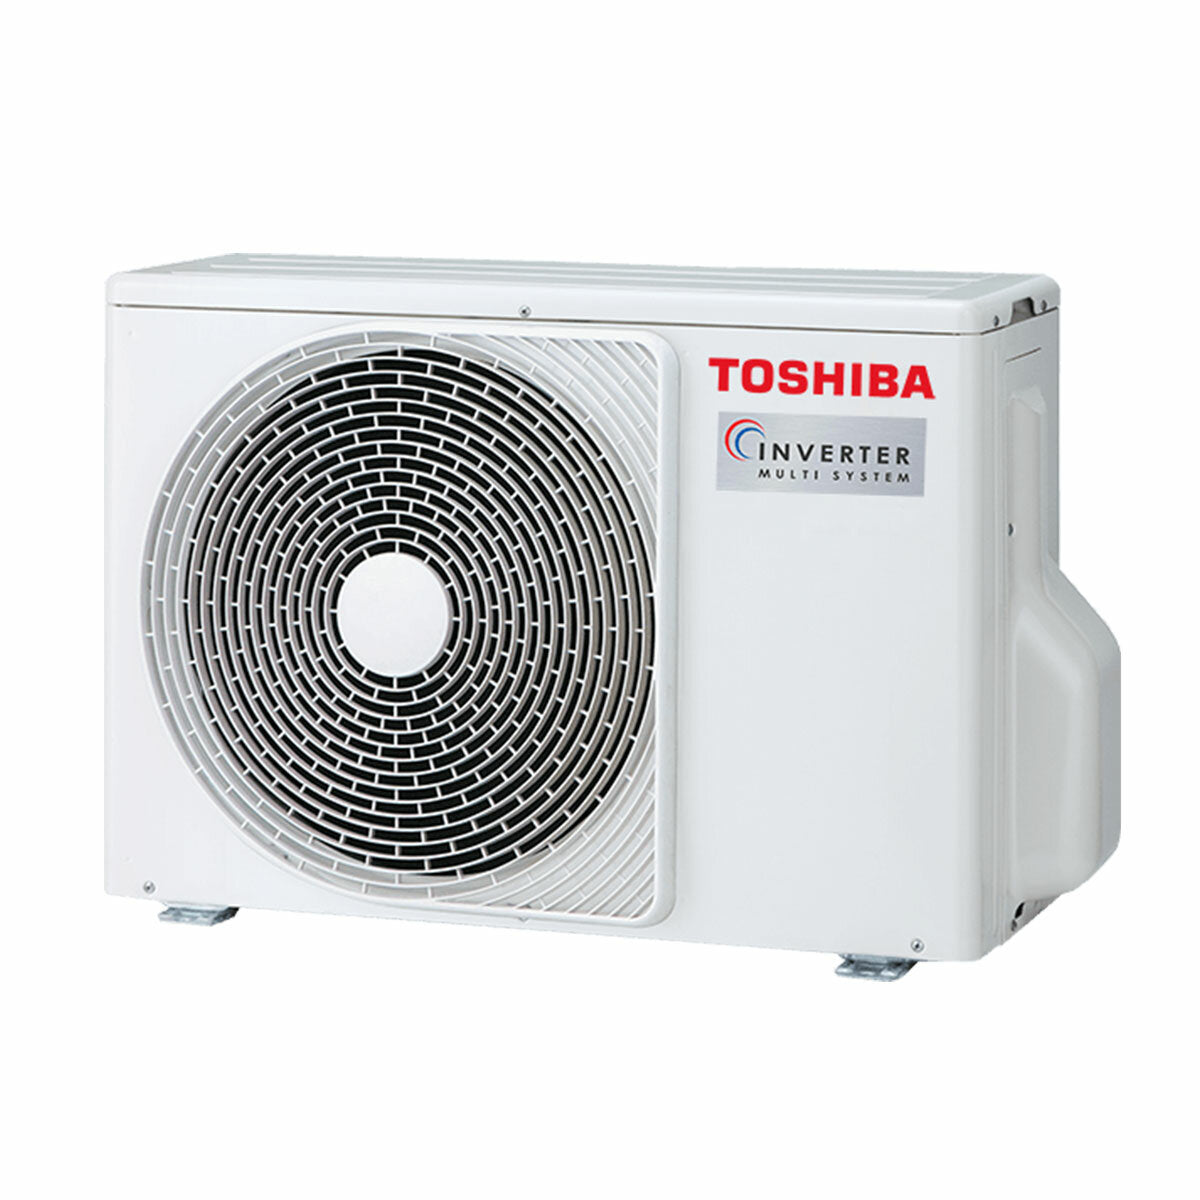 Toshiba ducted air conditioner U2 trial split 7000+7000+16000 BTU inverter A+++ external unit 5.2 kW